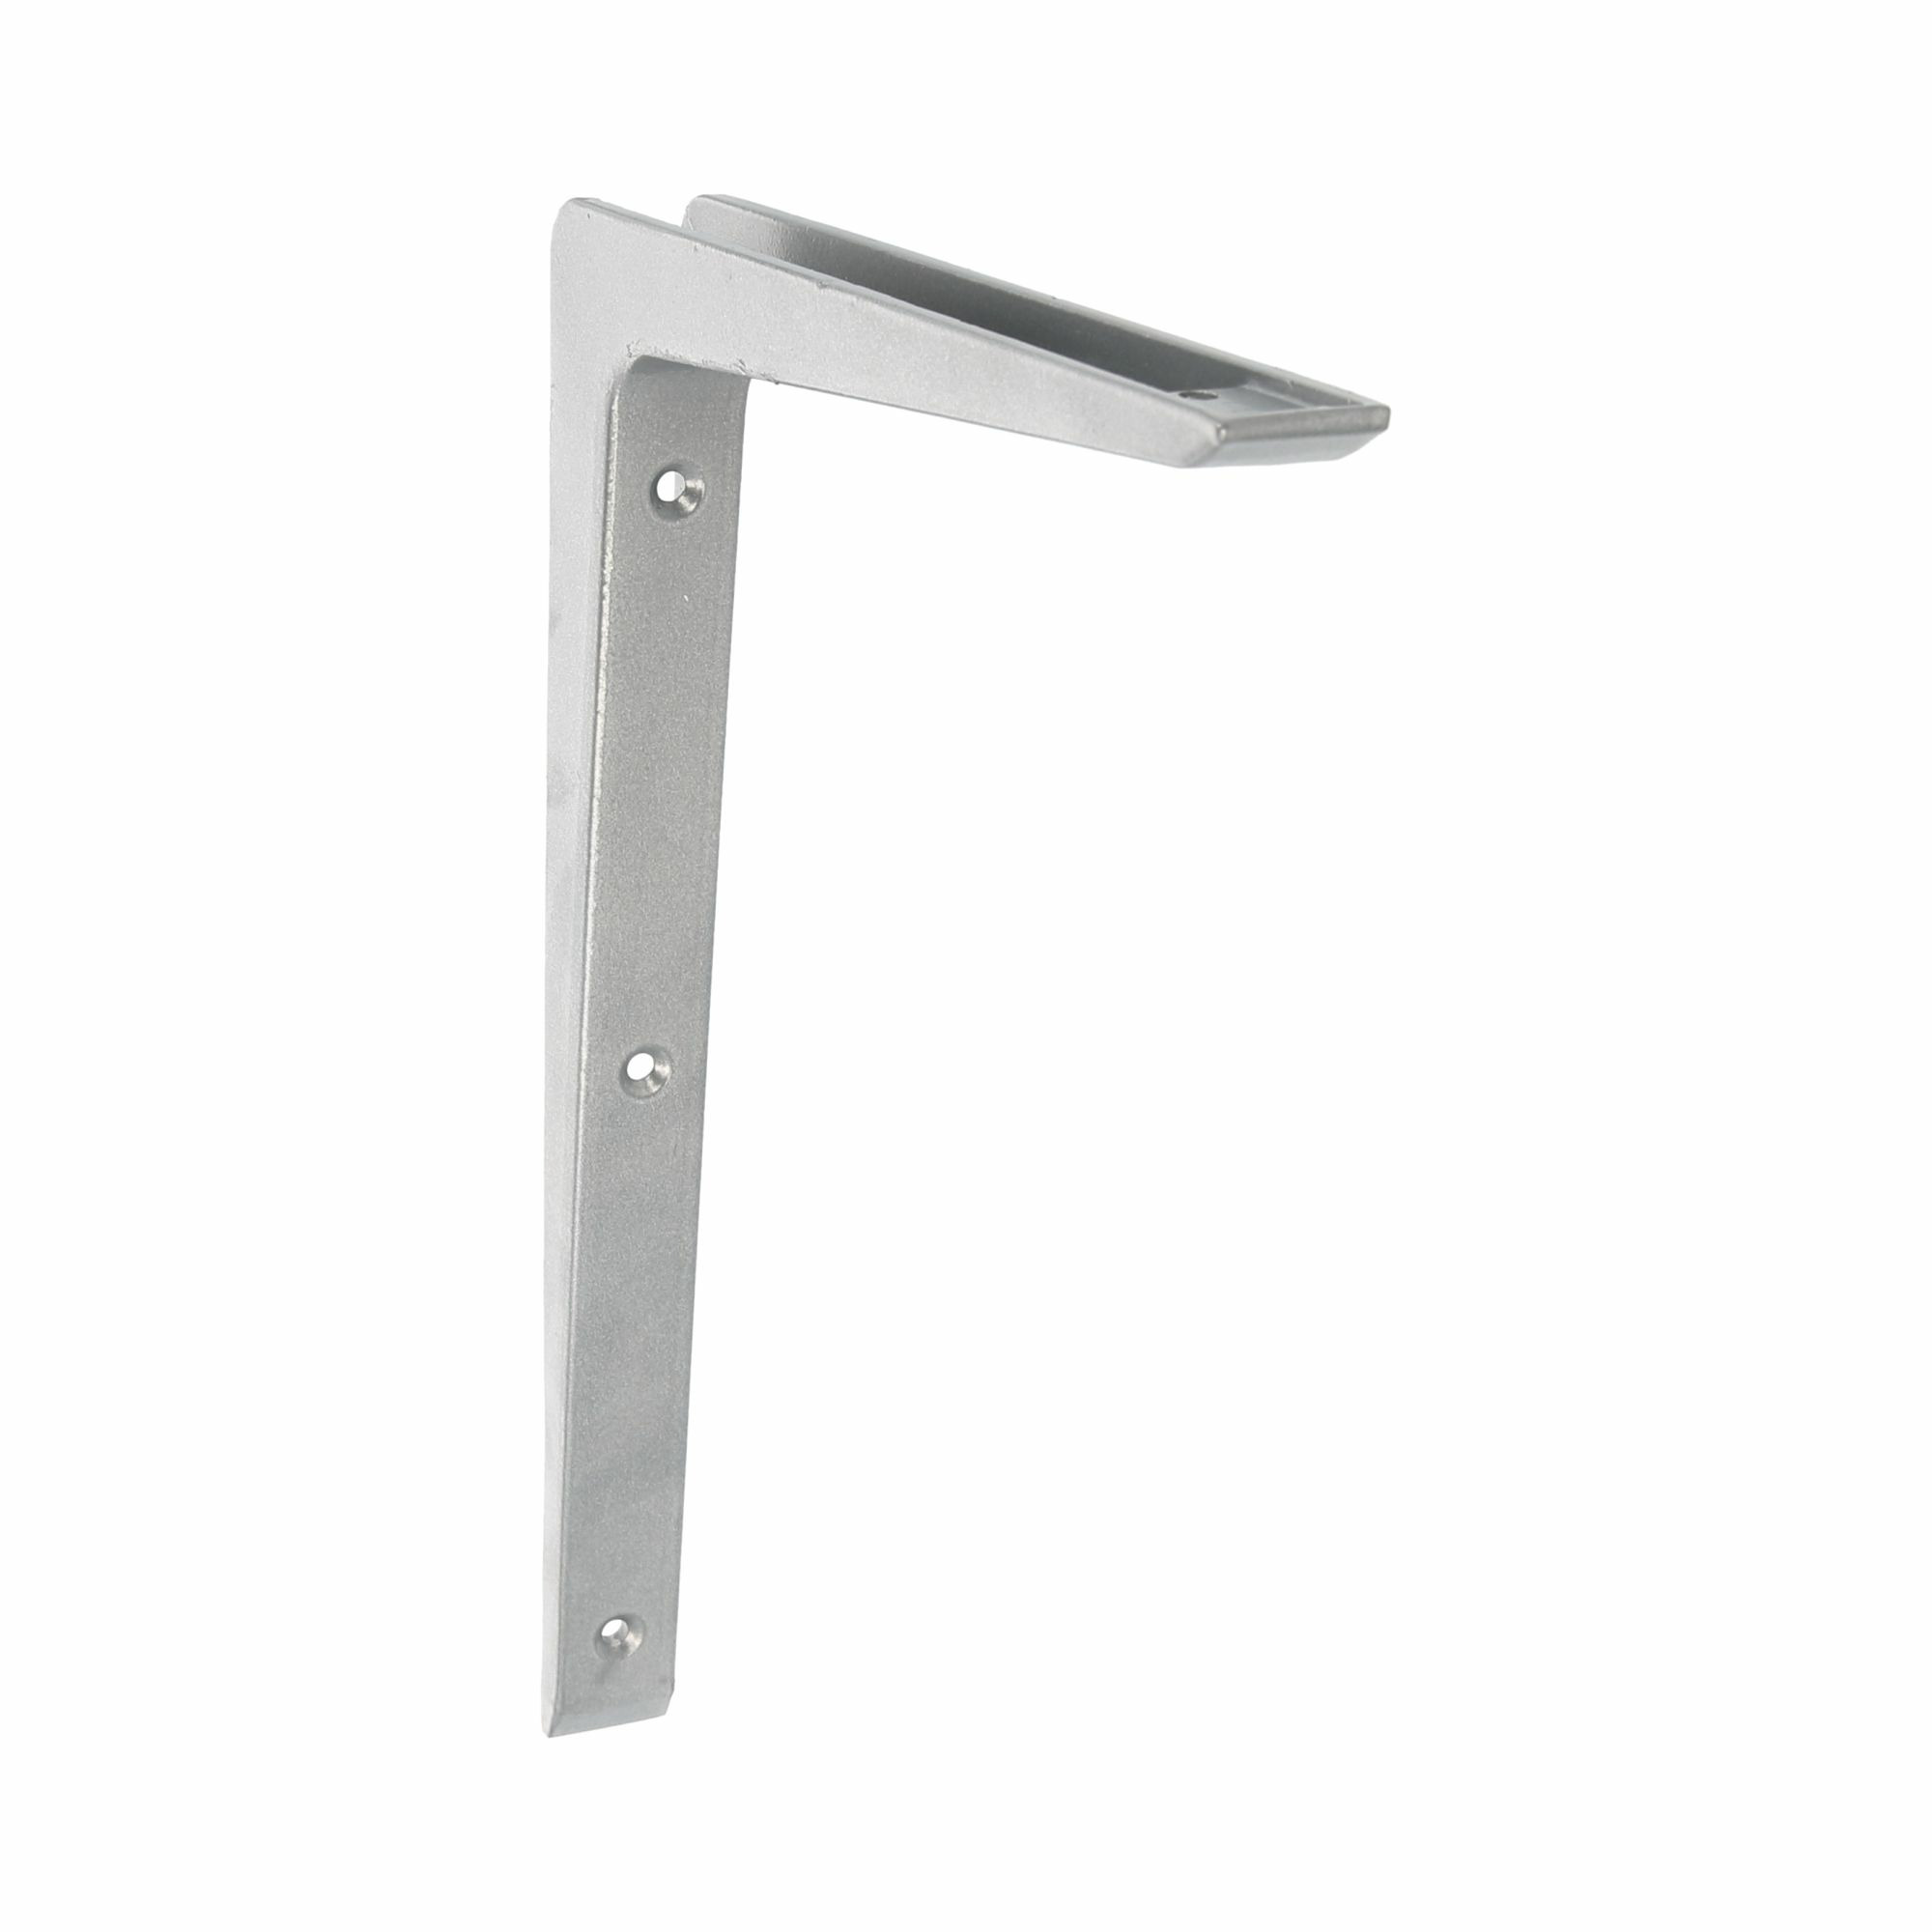 AMIG Plankdrager/planksteun van aluminium - gelakt zilvergrijs - H250 x B200 mm -